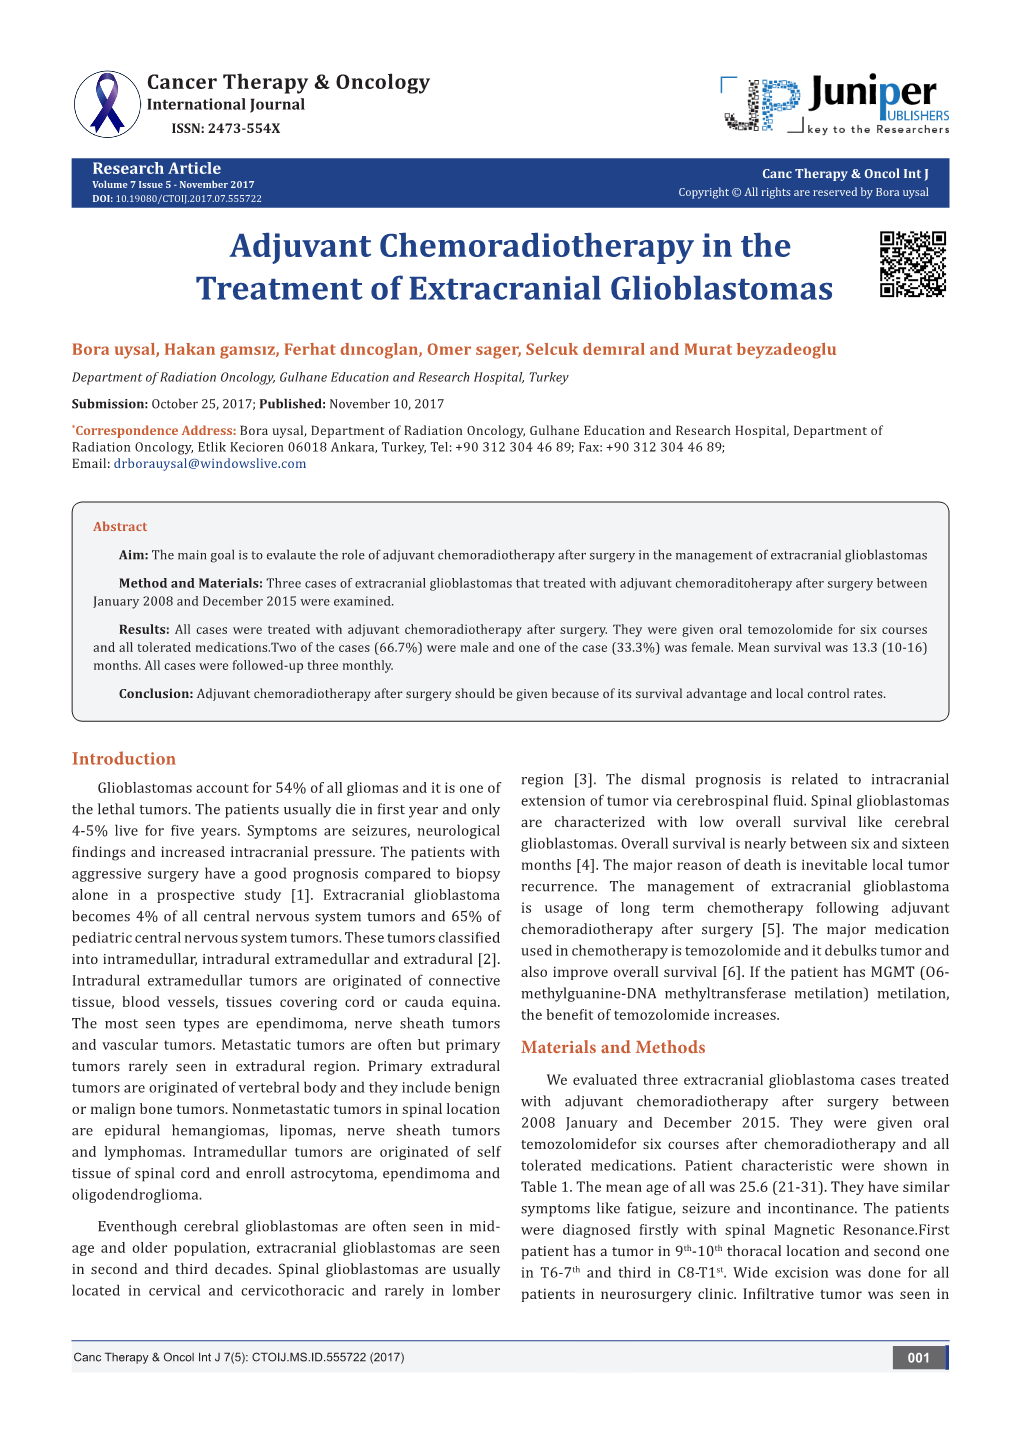 Adjuvant Chemoradiotherapy in the Treatment of Extracranial Glioblastomas